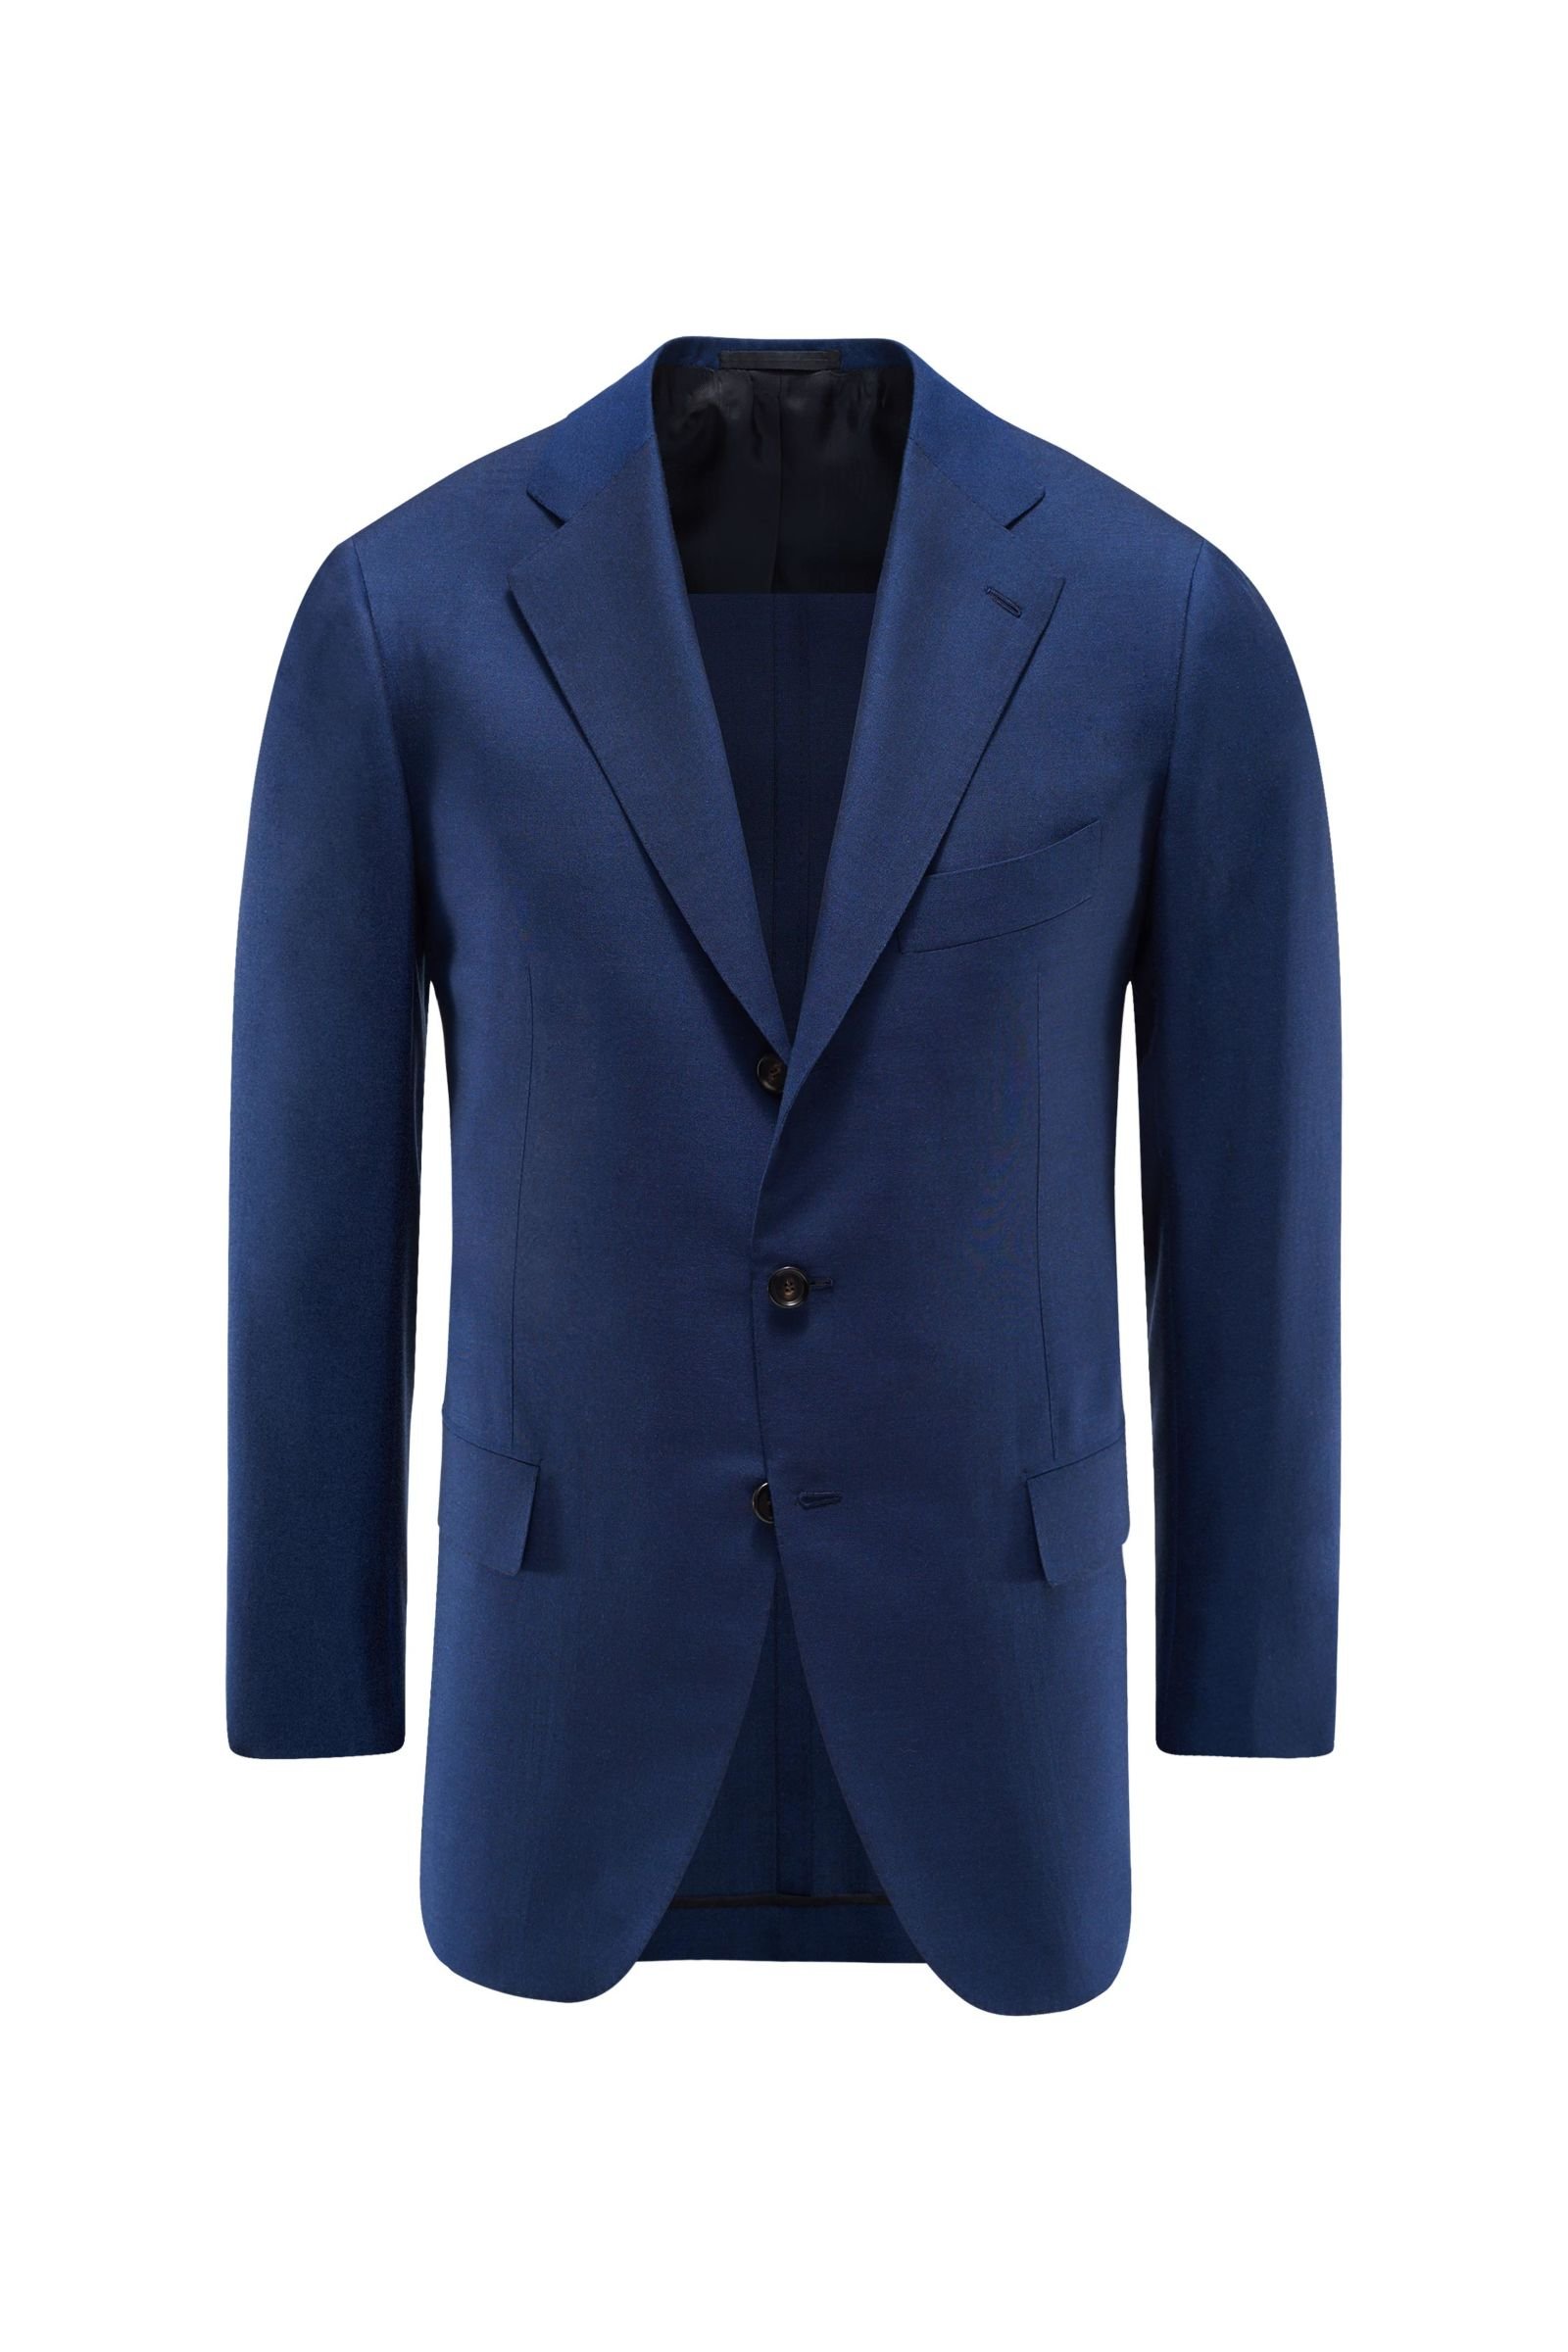 Smart-casual jacket blue